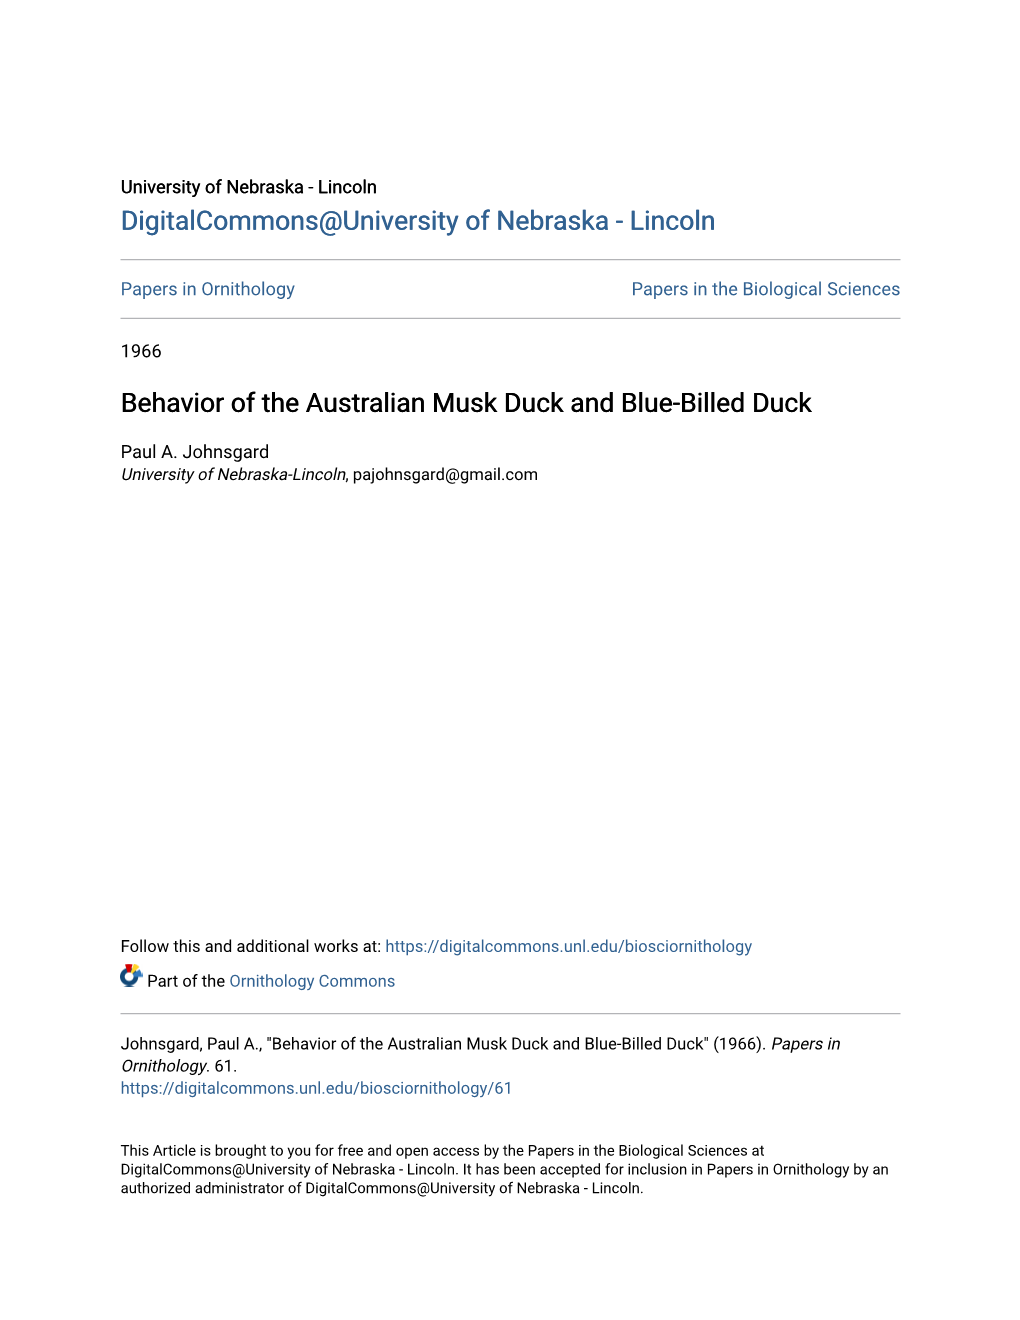 Behavior of the Australian Musk Duck and Blue-Billed Duck